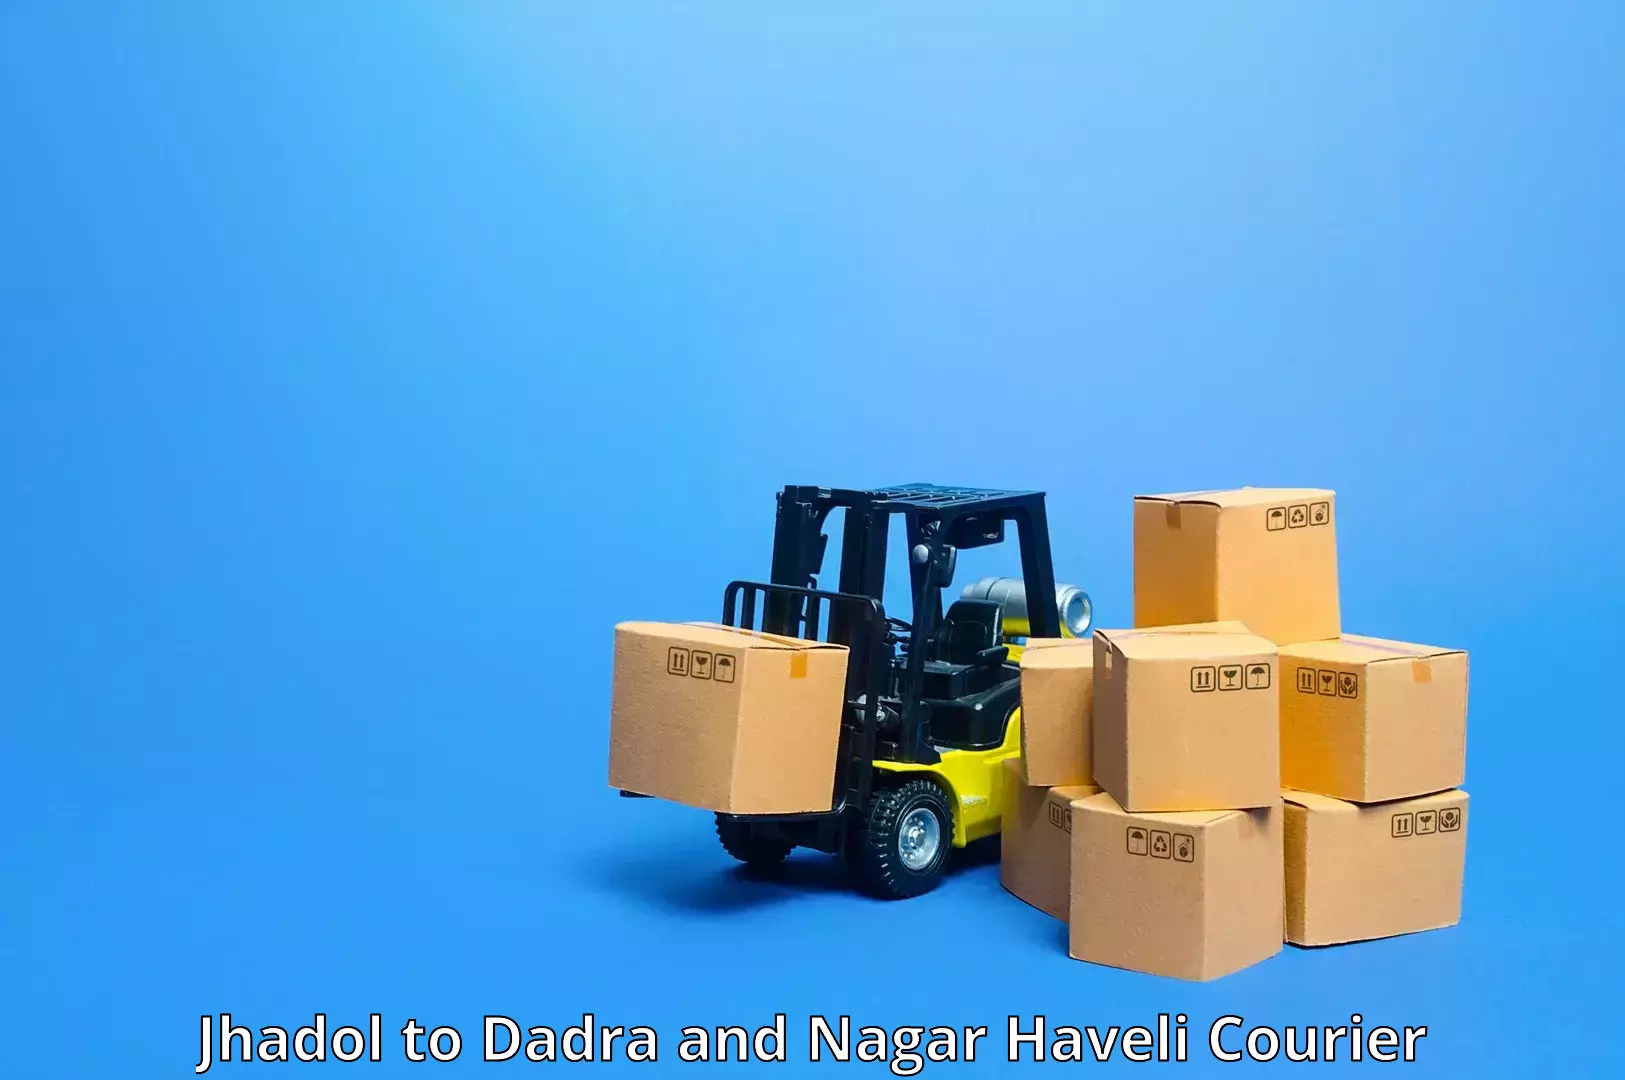 Reliable package handling Jhadol to Silvassa